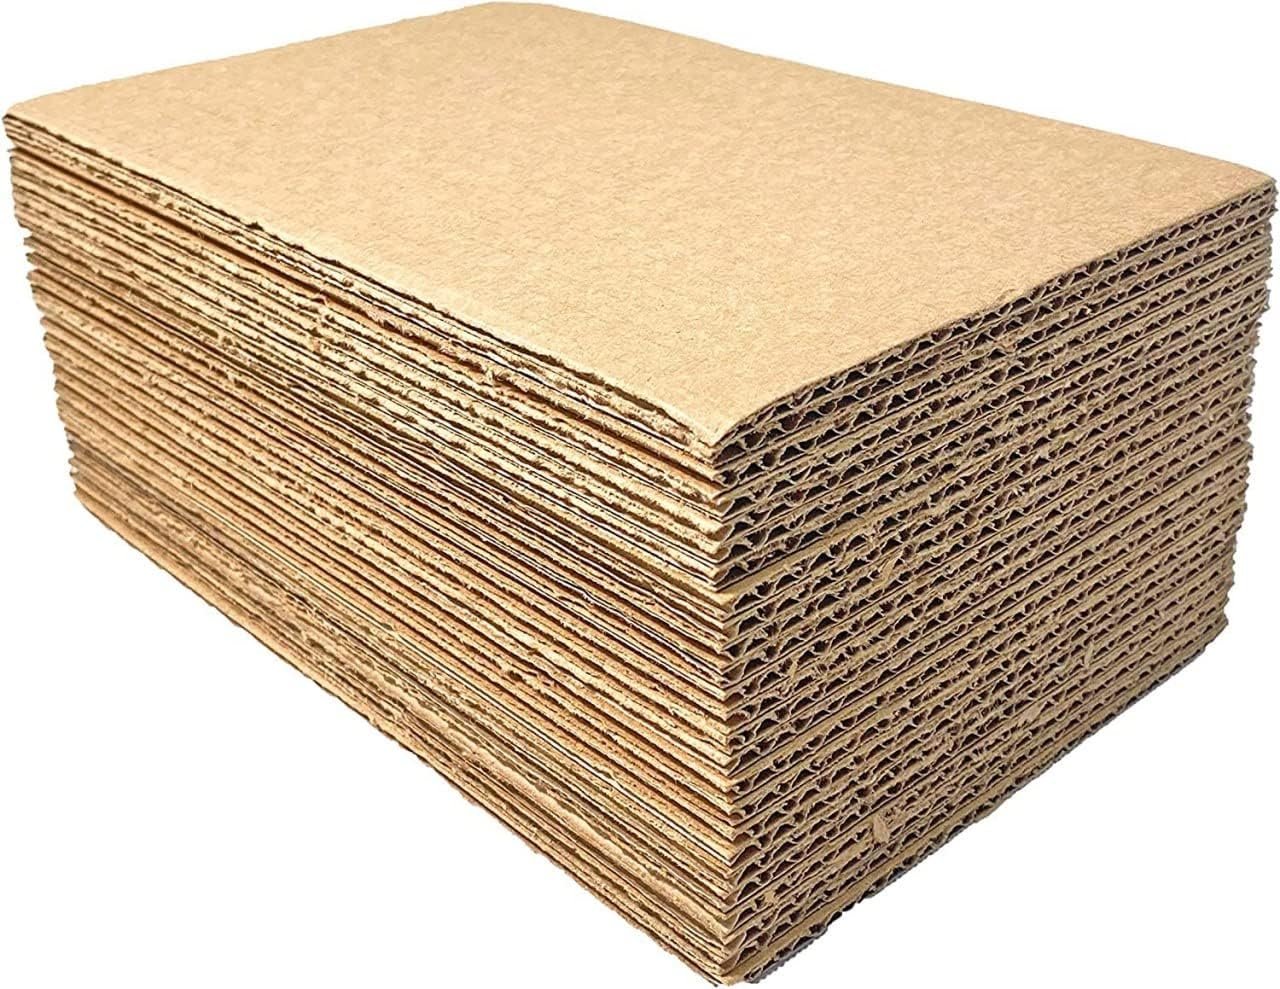 50 12x12 Cardboard Corrugated Pads Inserts Filler Sheet 12 x 12